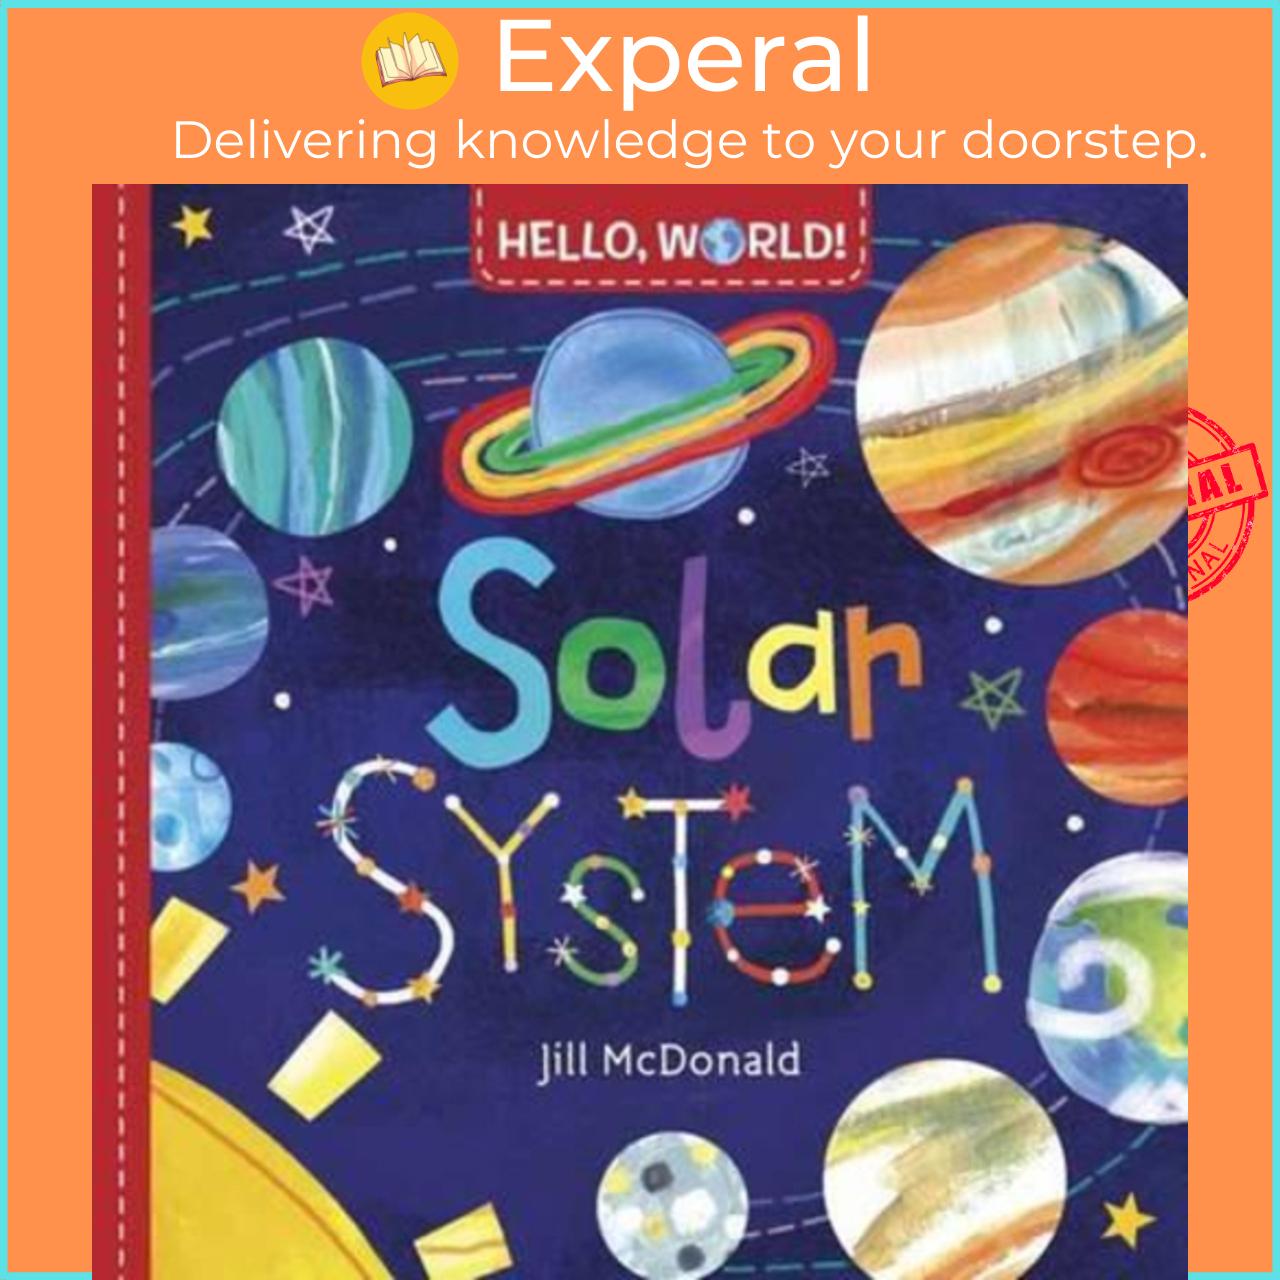 Sách - Hello, World! Solar System by Jill McDonald (US edition, paperback)